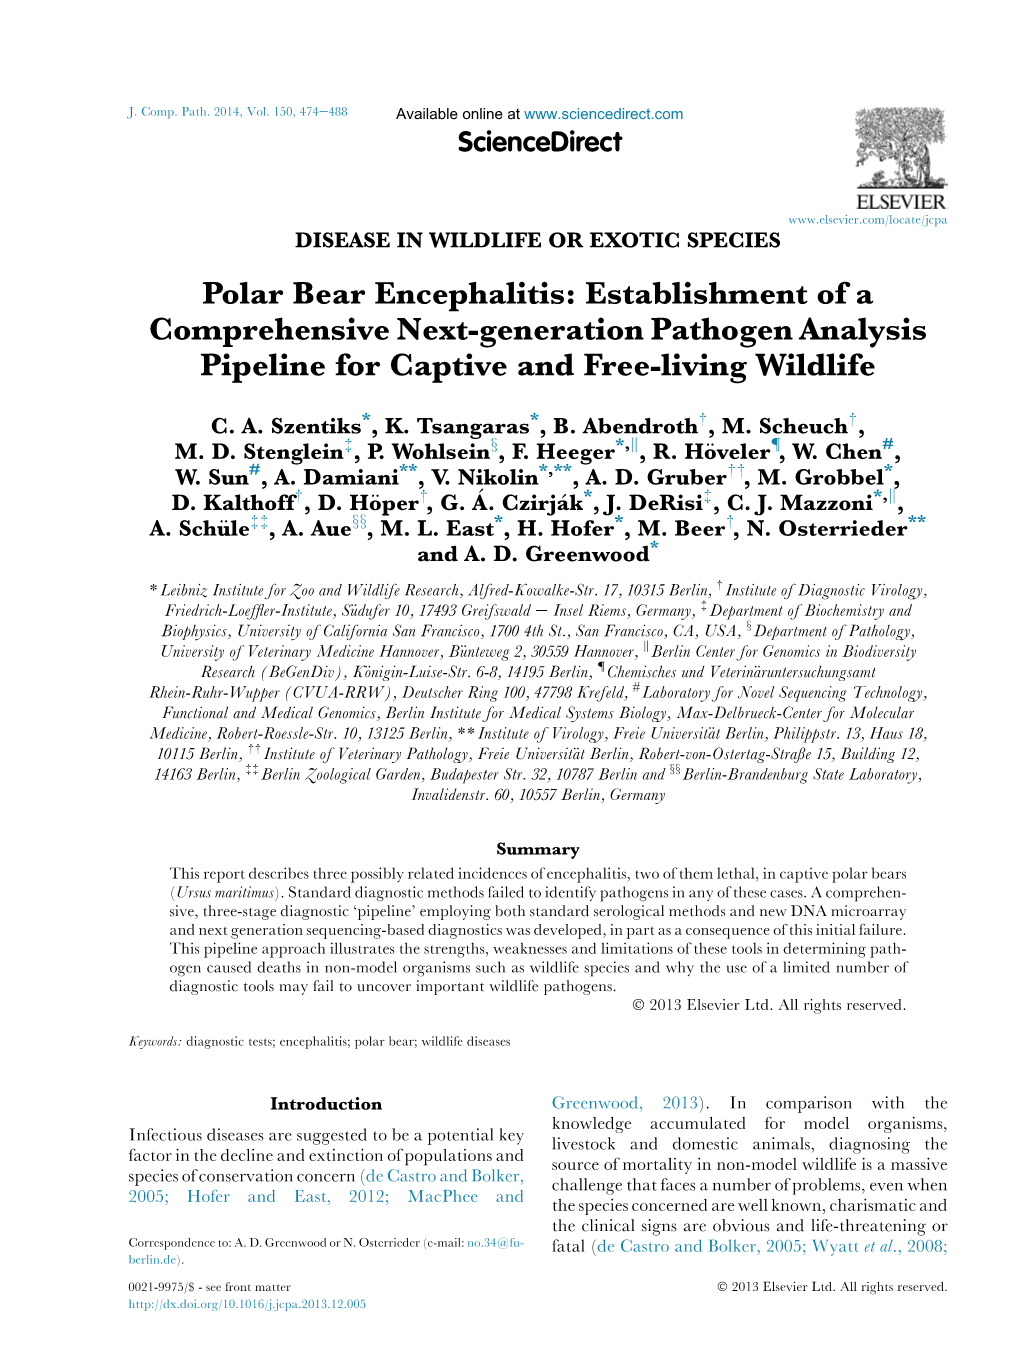 Polar Bear Encephalitis: Establishment of a Comprehensive Next-Generation Pathogen Analysis Pipeline for Captive and Free-Living Wildlife